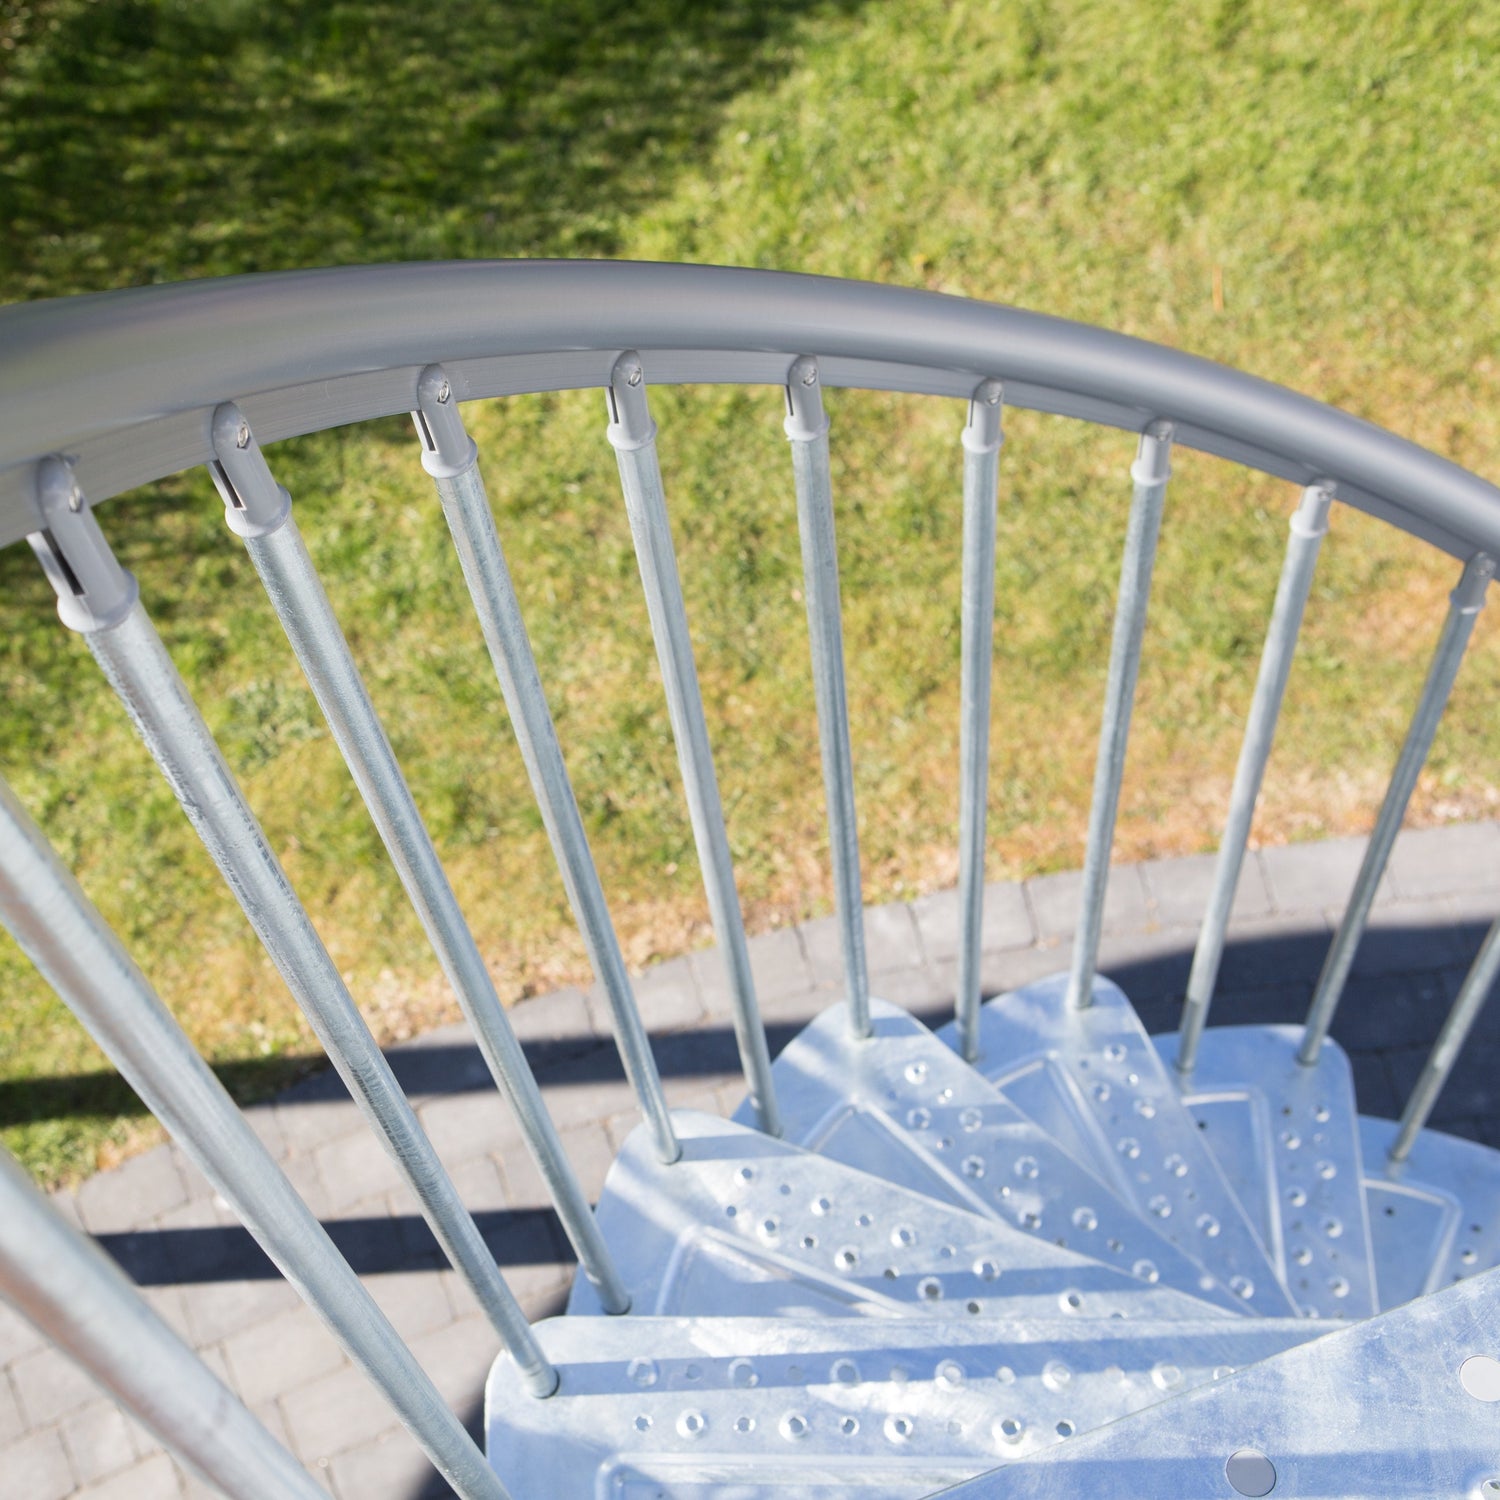 Toronto Gardenspin Spiral Staircase Kit